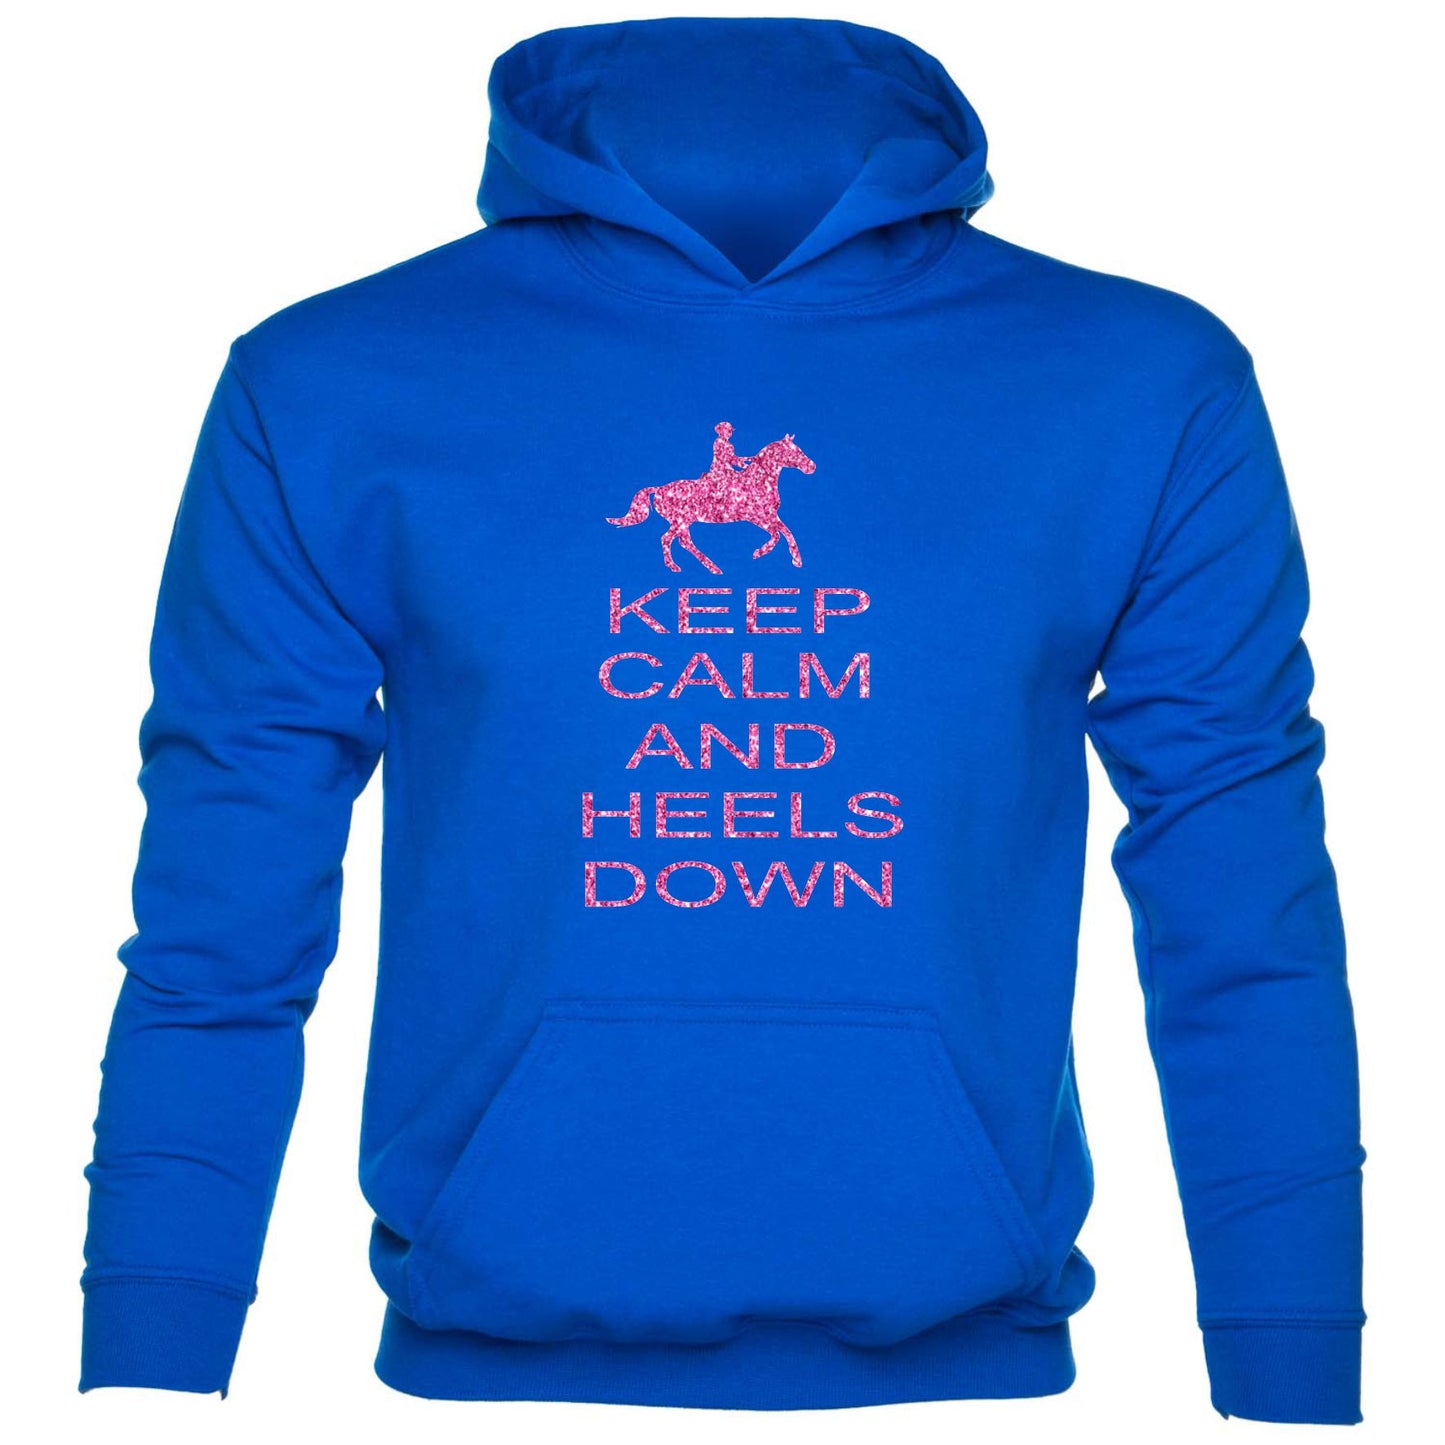 Keep Calm Heels Down Horse Riding kids hoodie